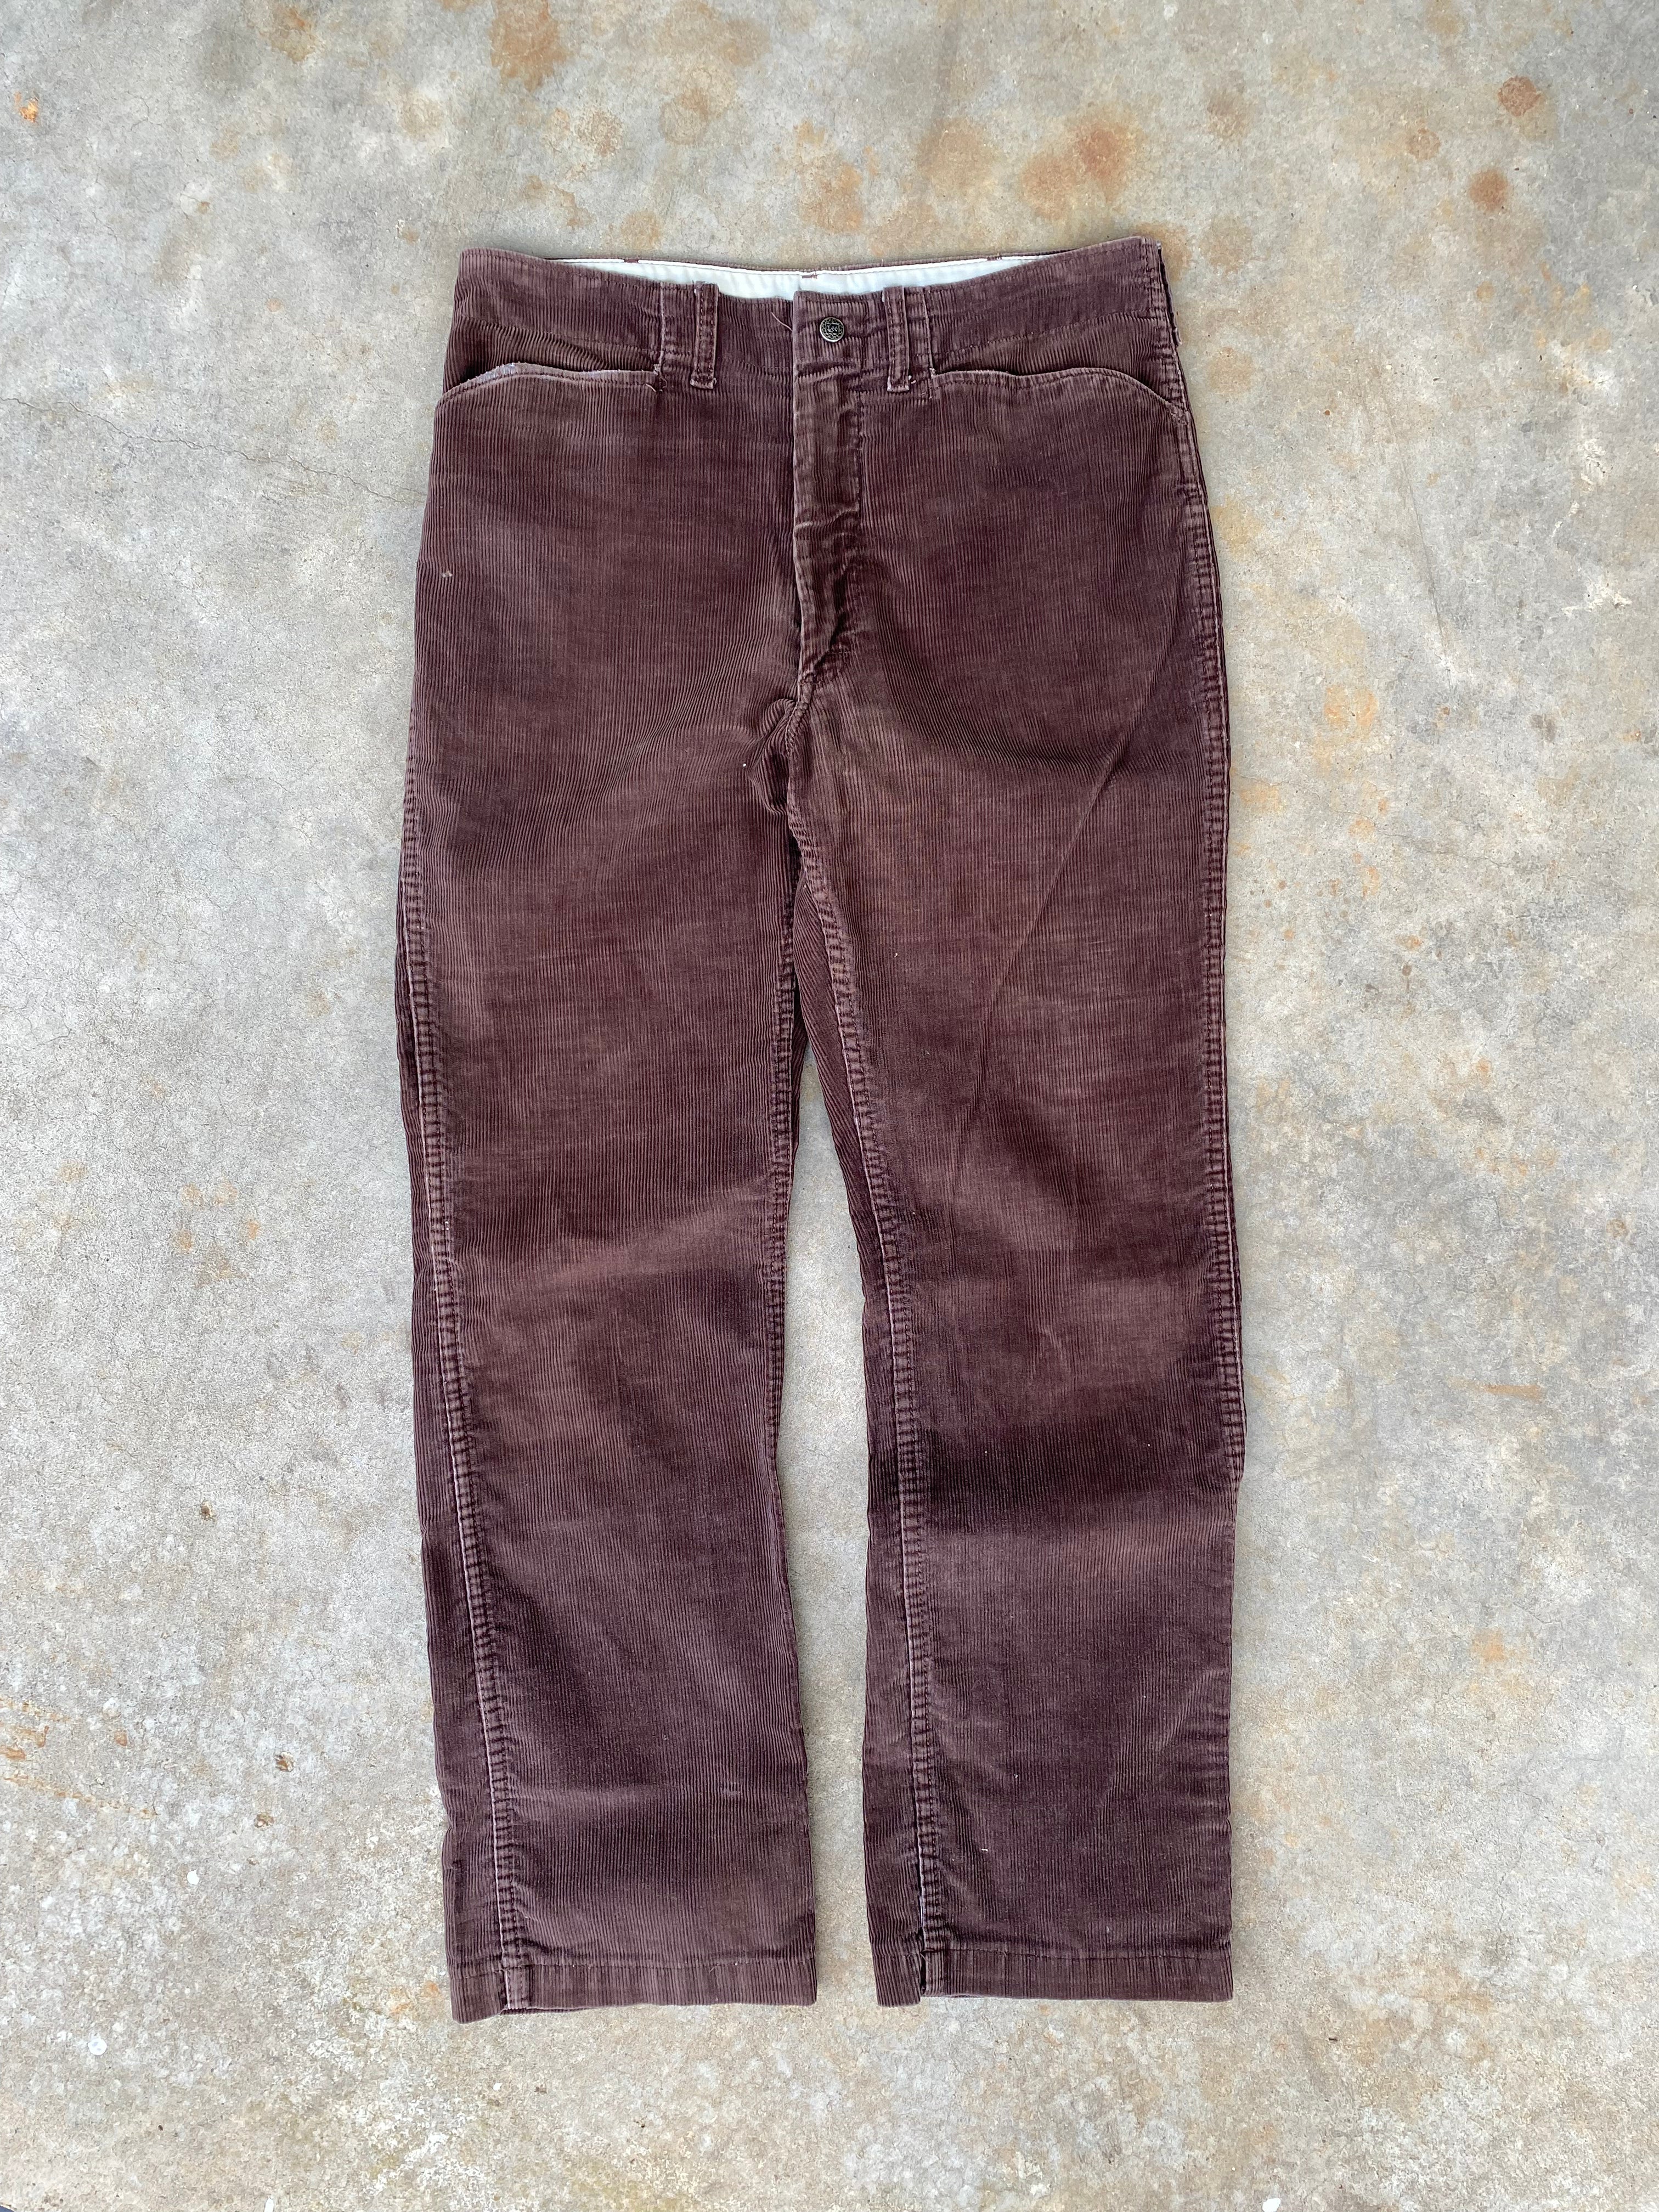 Vintage Lee Frisko Corduroy Pants (34"x30.5")